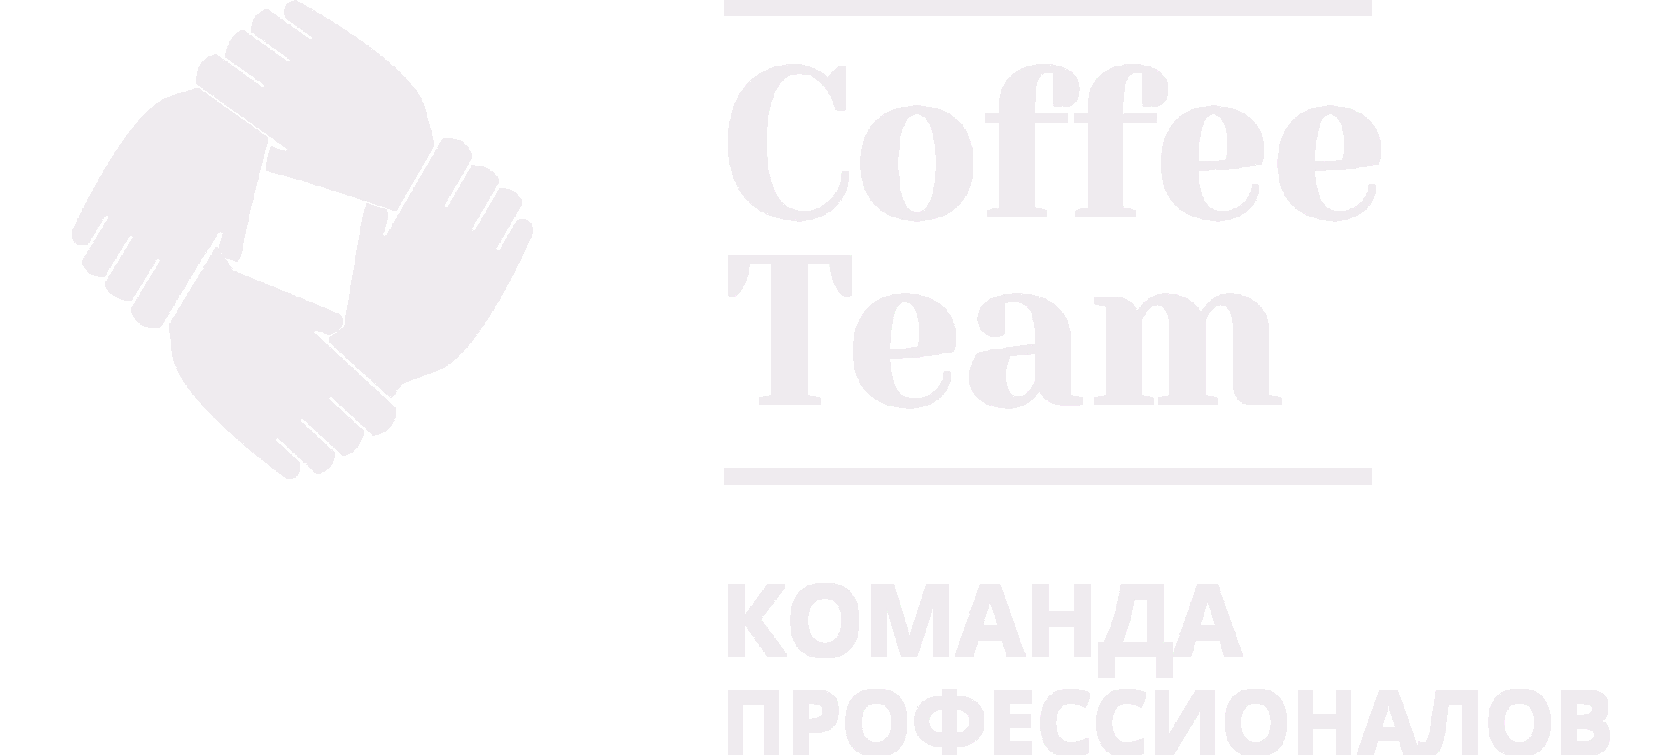 COFFEE TEAM